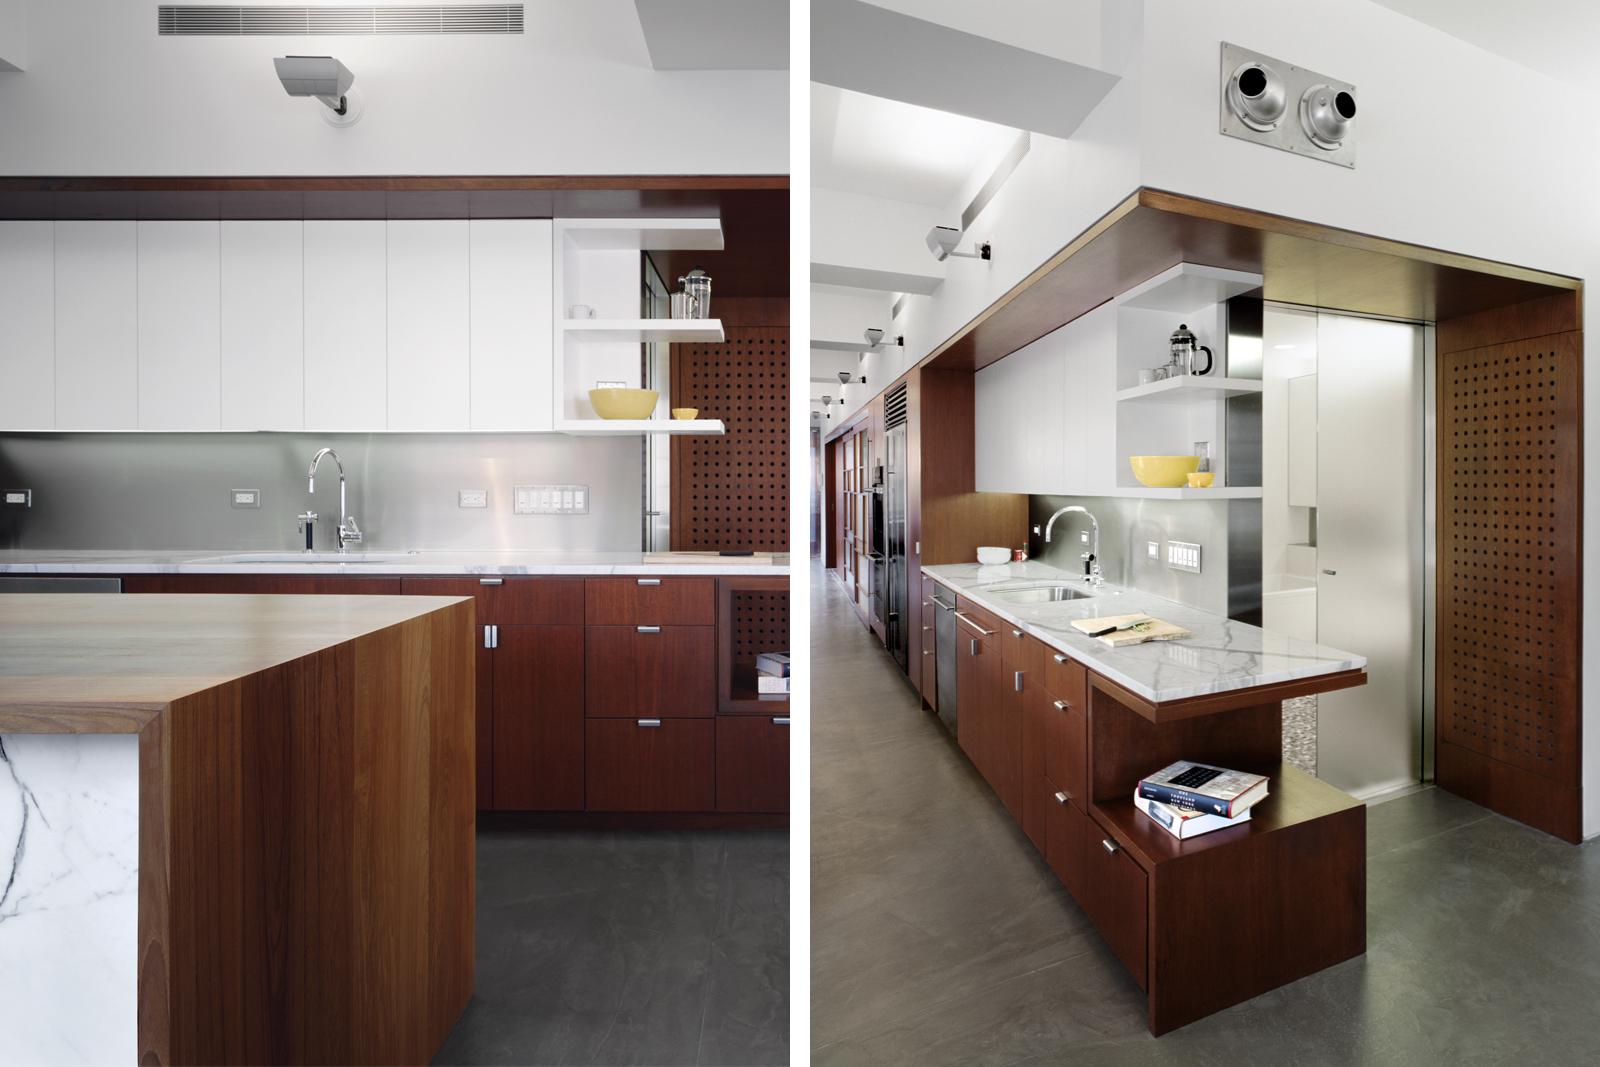 03-res4-resolution-4-architecture-modern-apartment-residential-nychay-loft-interior-kitchen.jpg